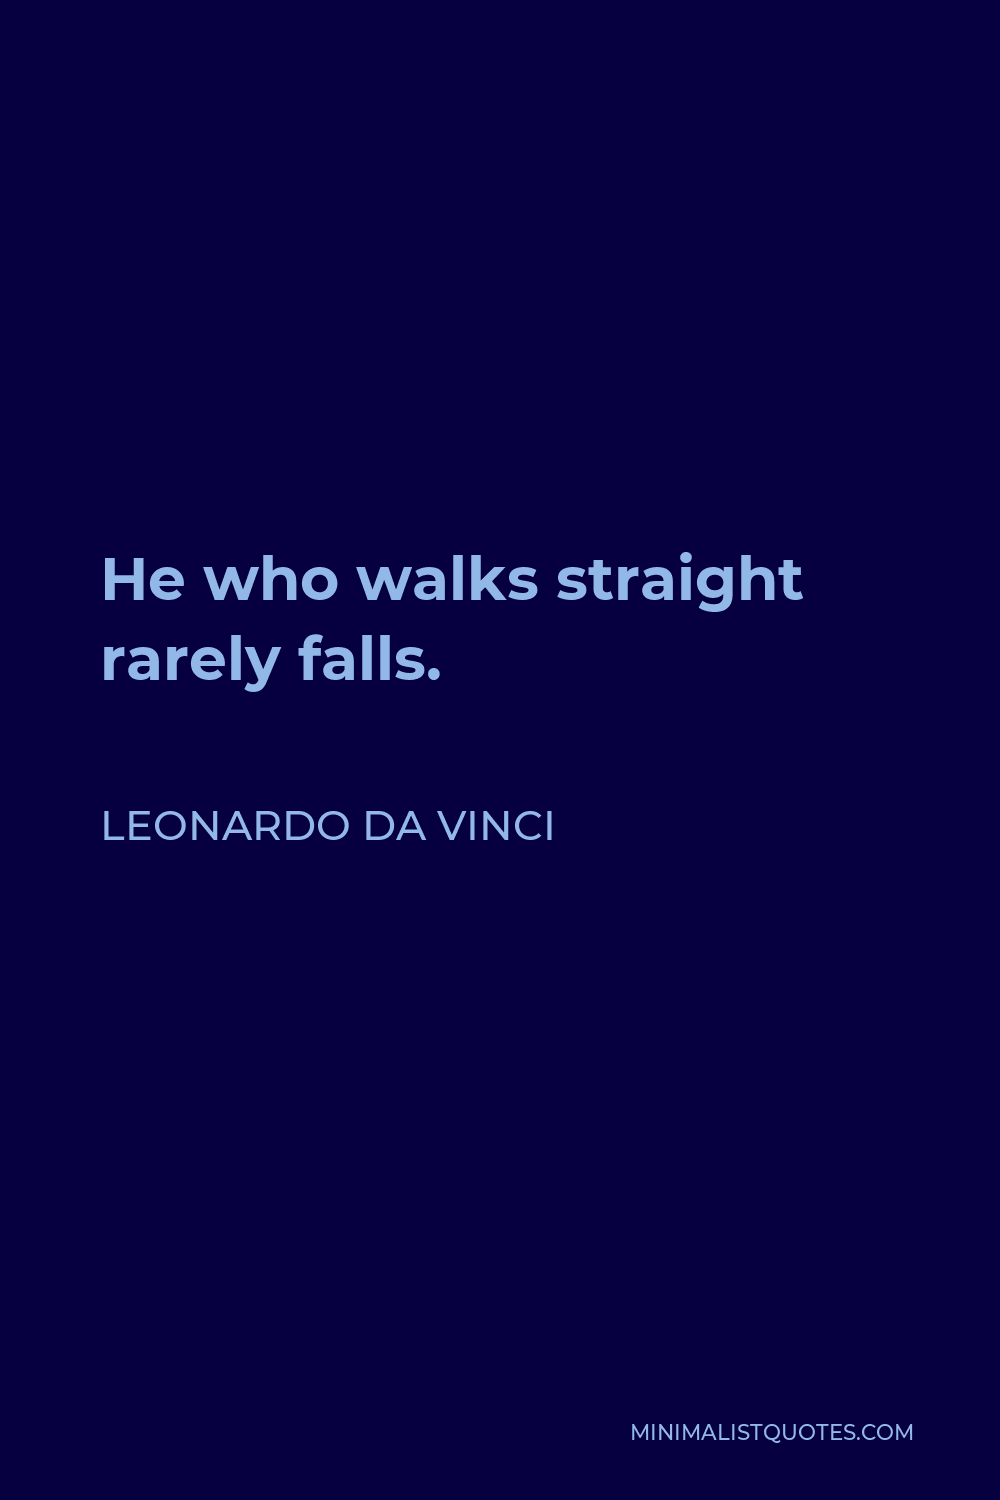 Leonardo da Vinci Quote - He who walks straight rarely falls.